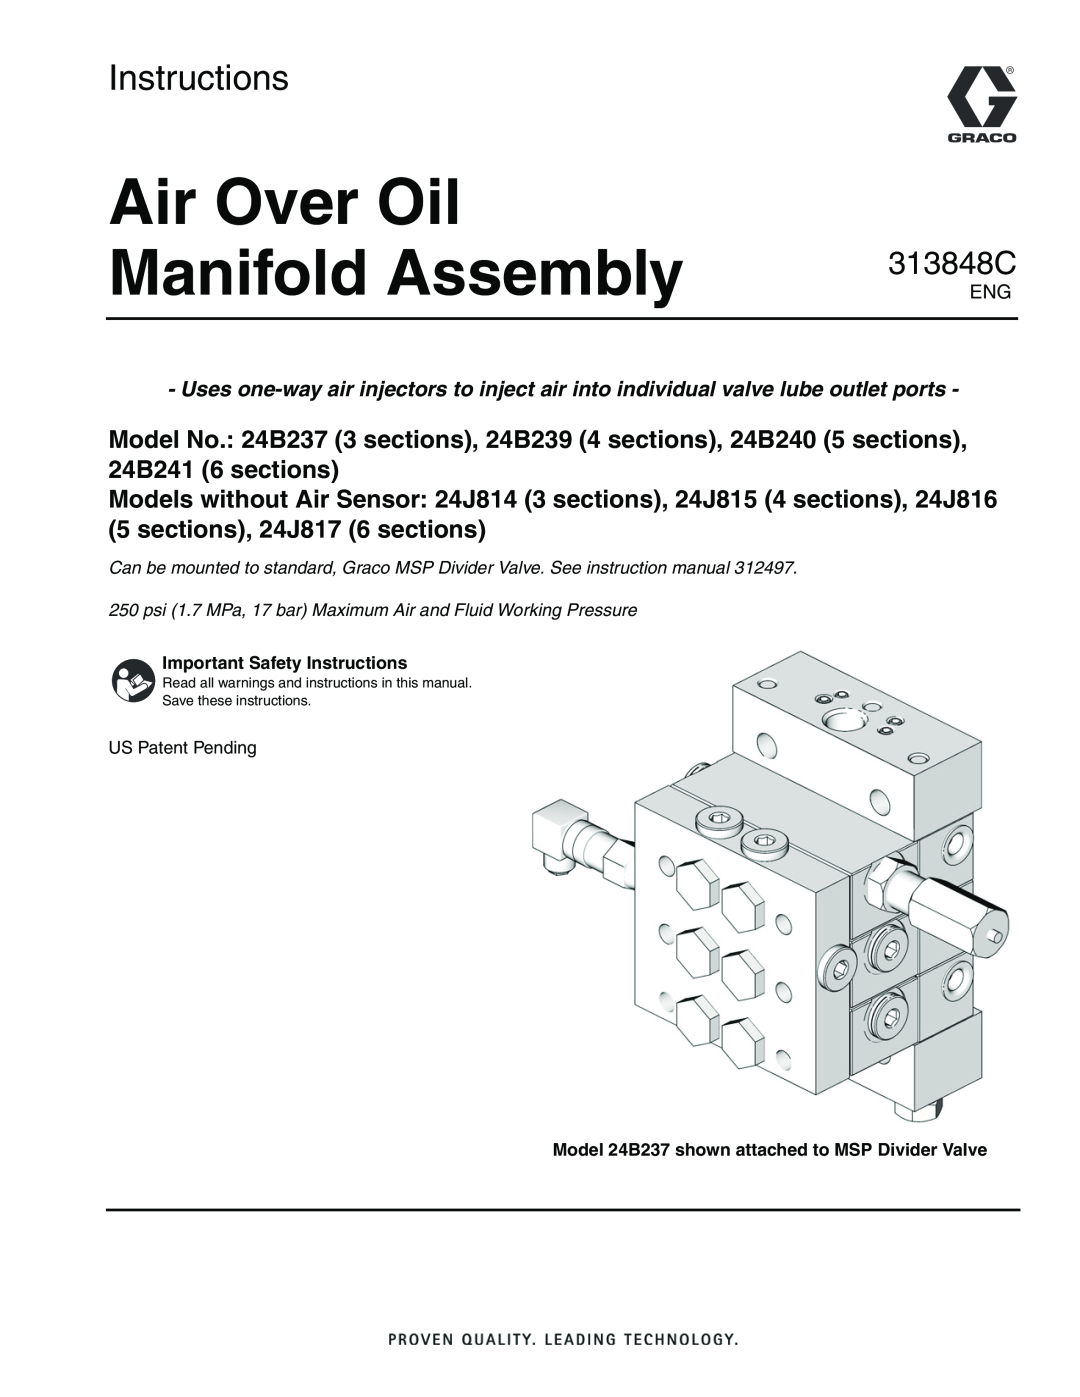 Graco 24J815, 24J817, 24B239, 24B241, 24J814, 24B240 instruction manual Air Over Oil, Manifold Assembly, Instructions, 313848C 